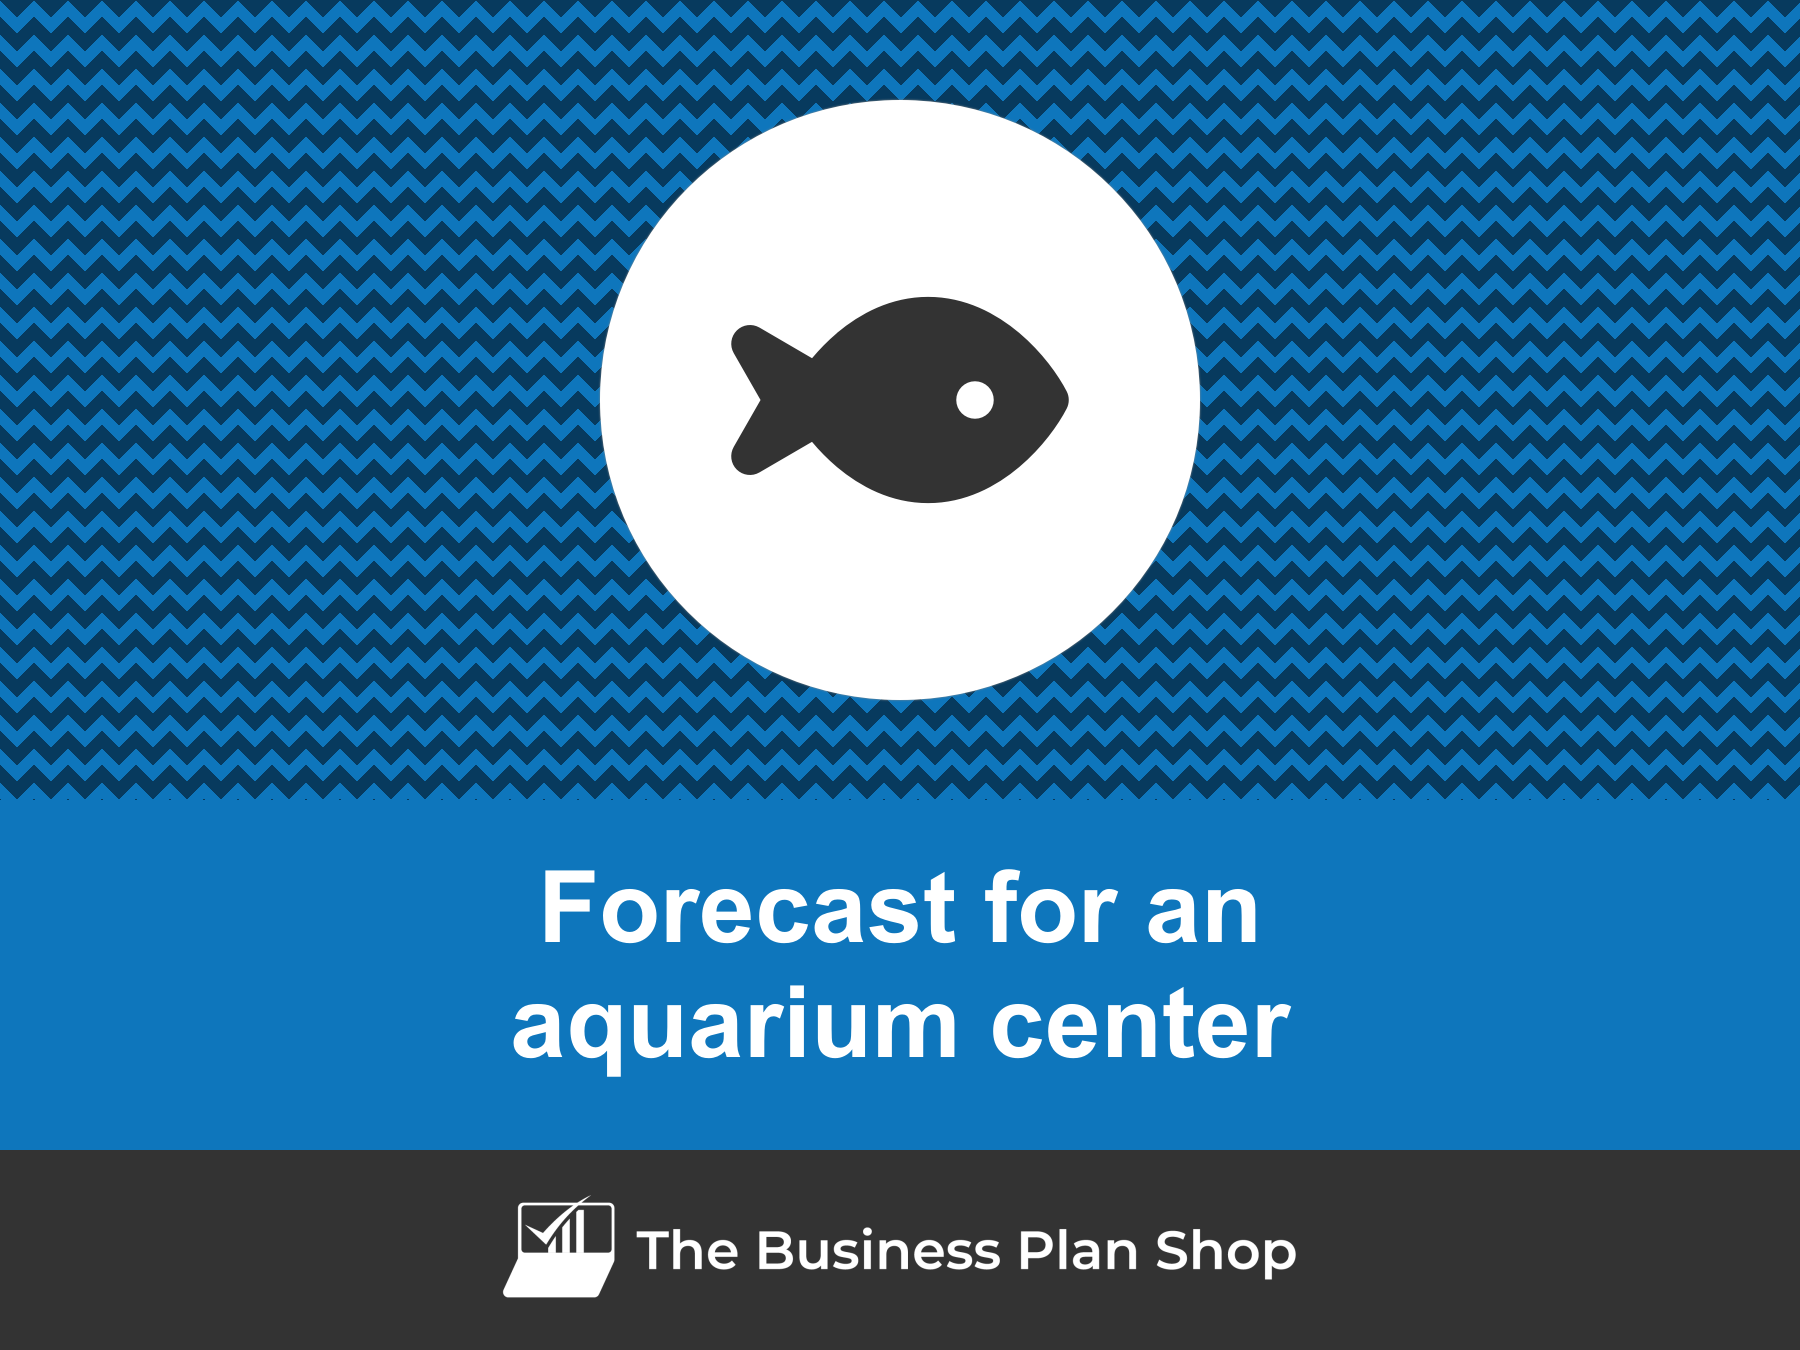 Starting an Aquarium Maintenance Business